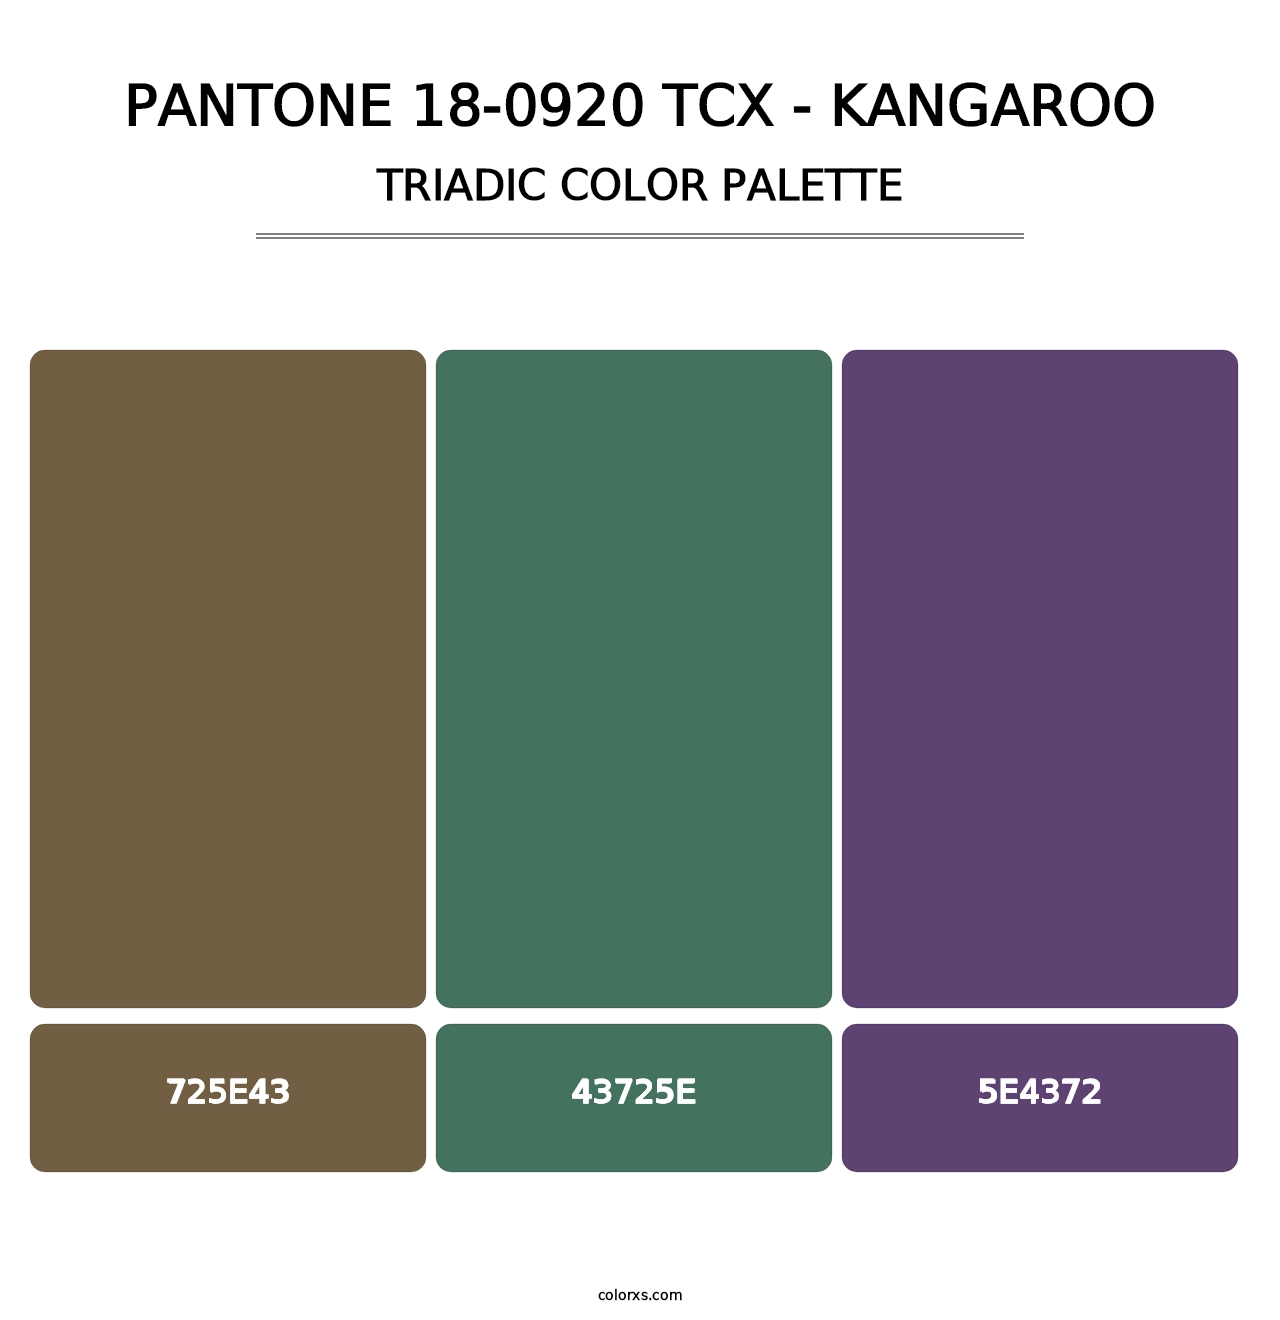 PANTONE 18-0920 TCX - Kangaroo - Triadic Color Palette